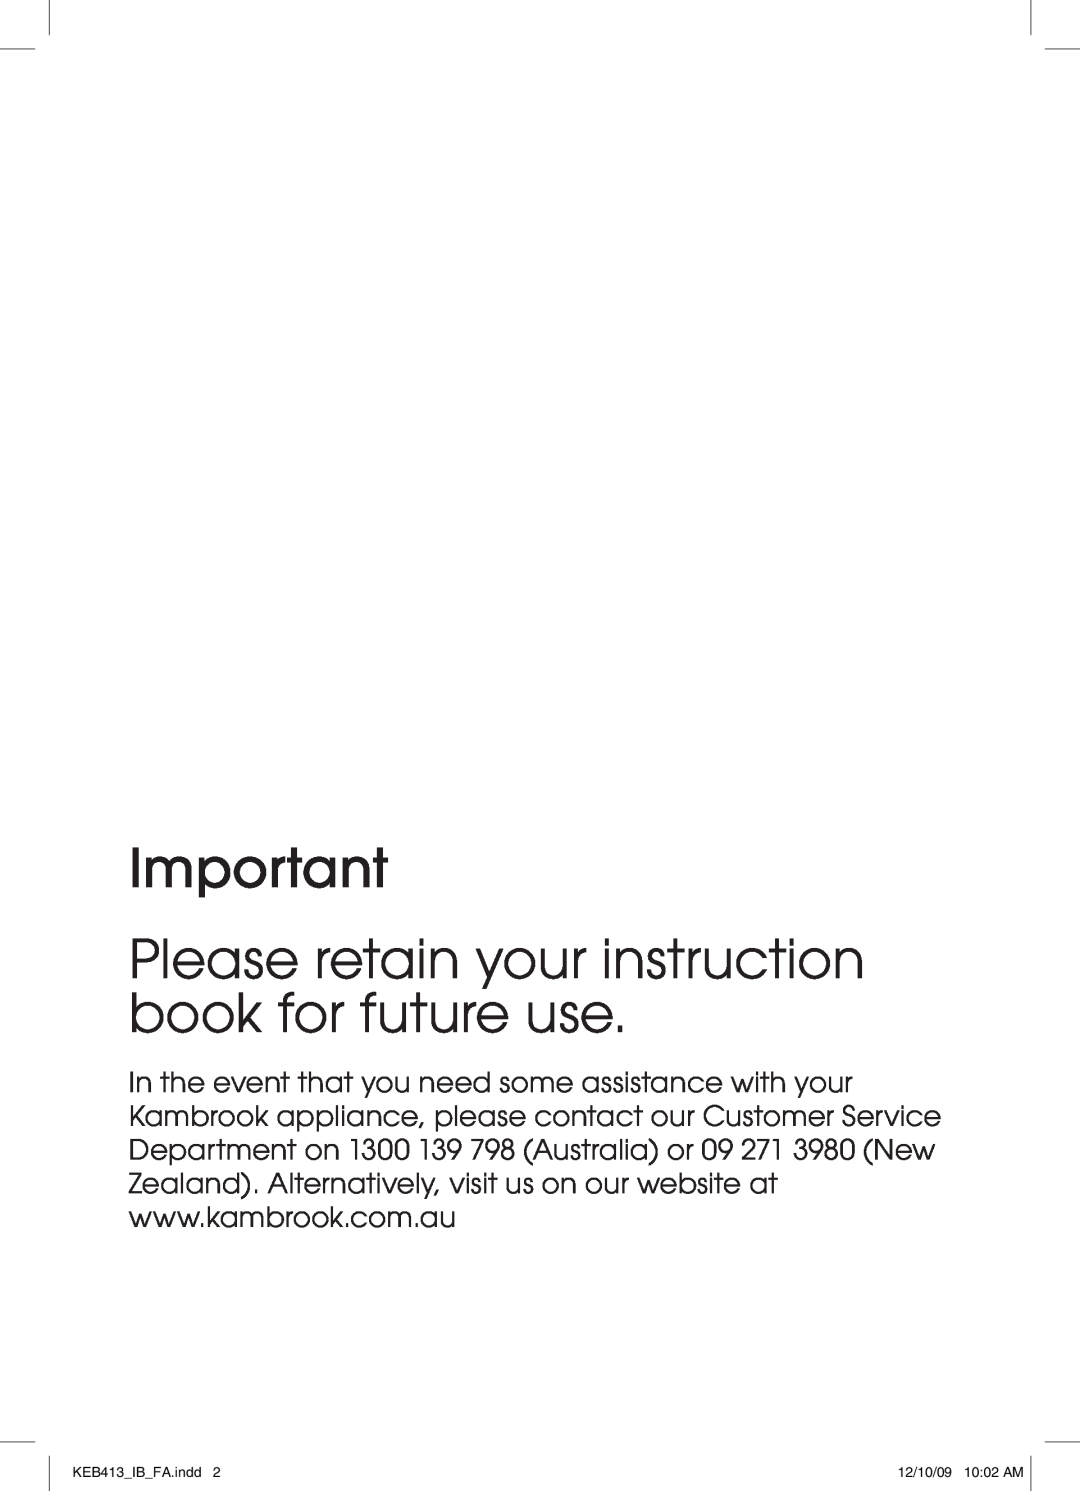 Kambrook KEB433, KEB533, KEB513 manual Please retain your instruction book for future use, KEB413IBFA.indd, 12/10/09 1002 AM 